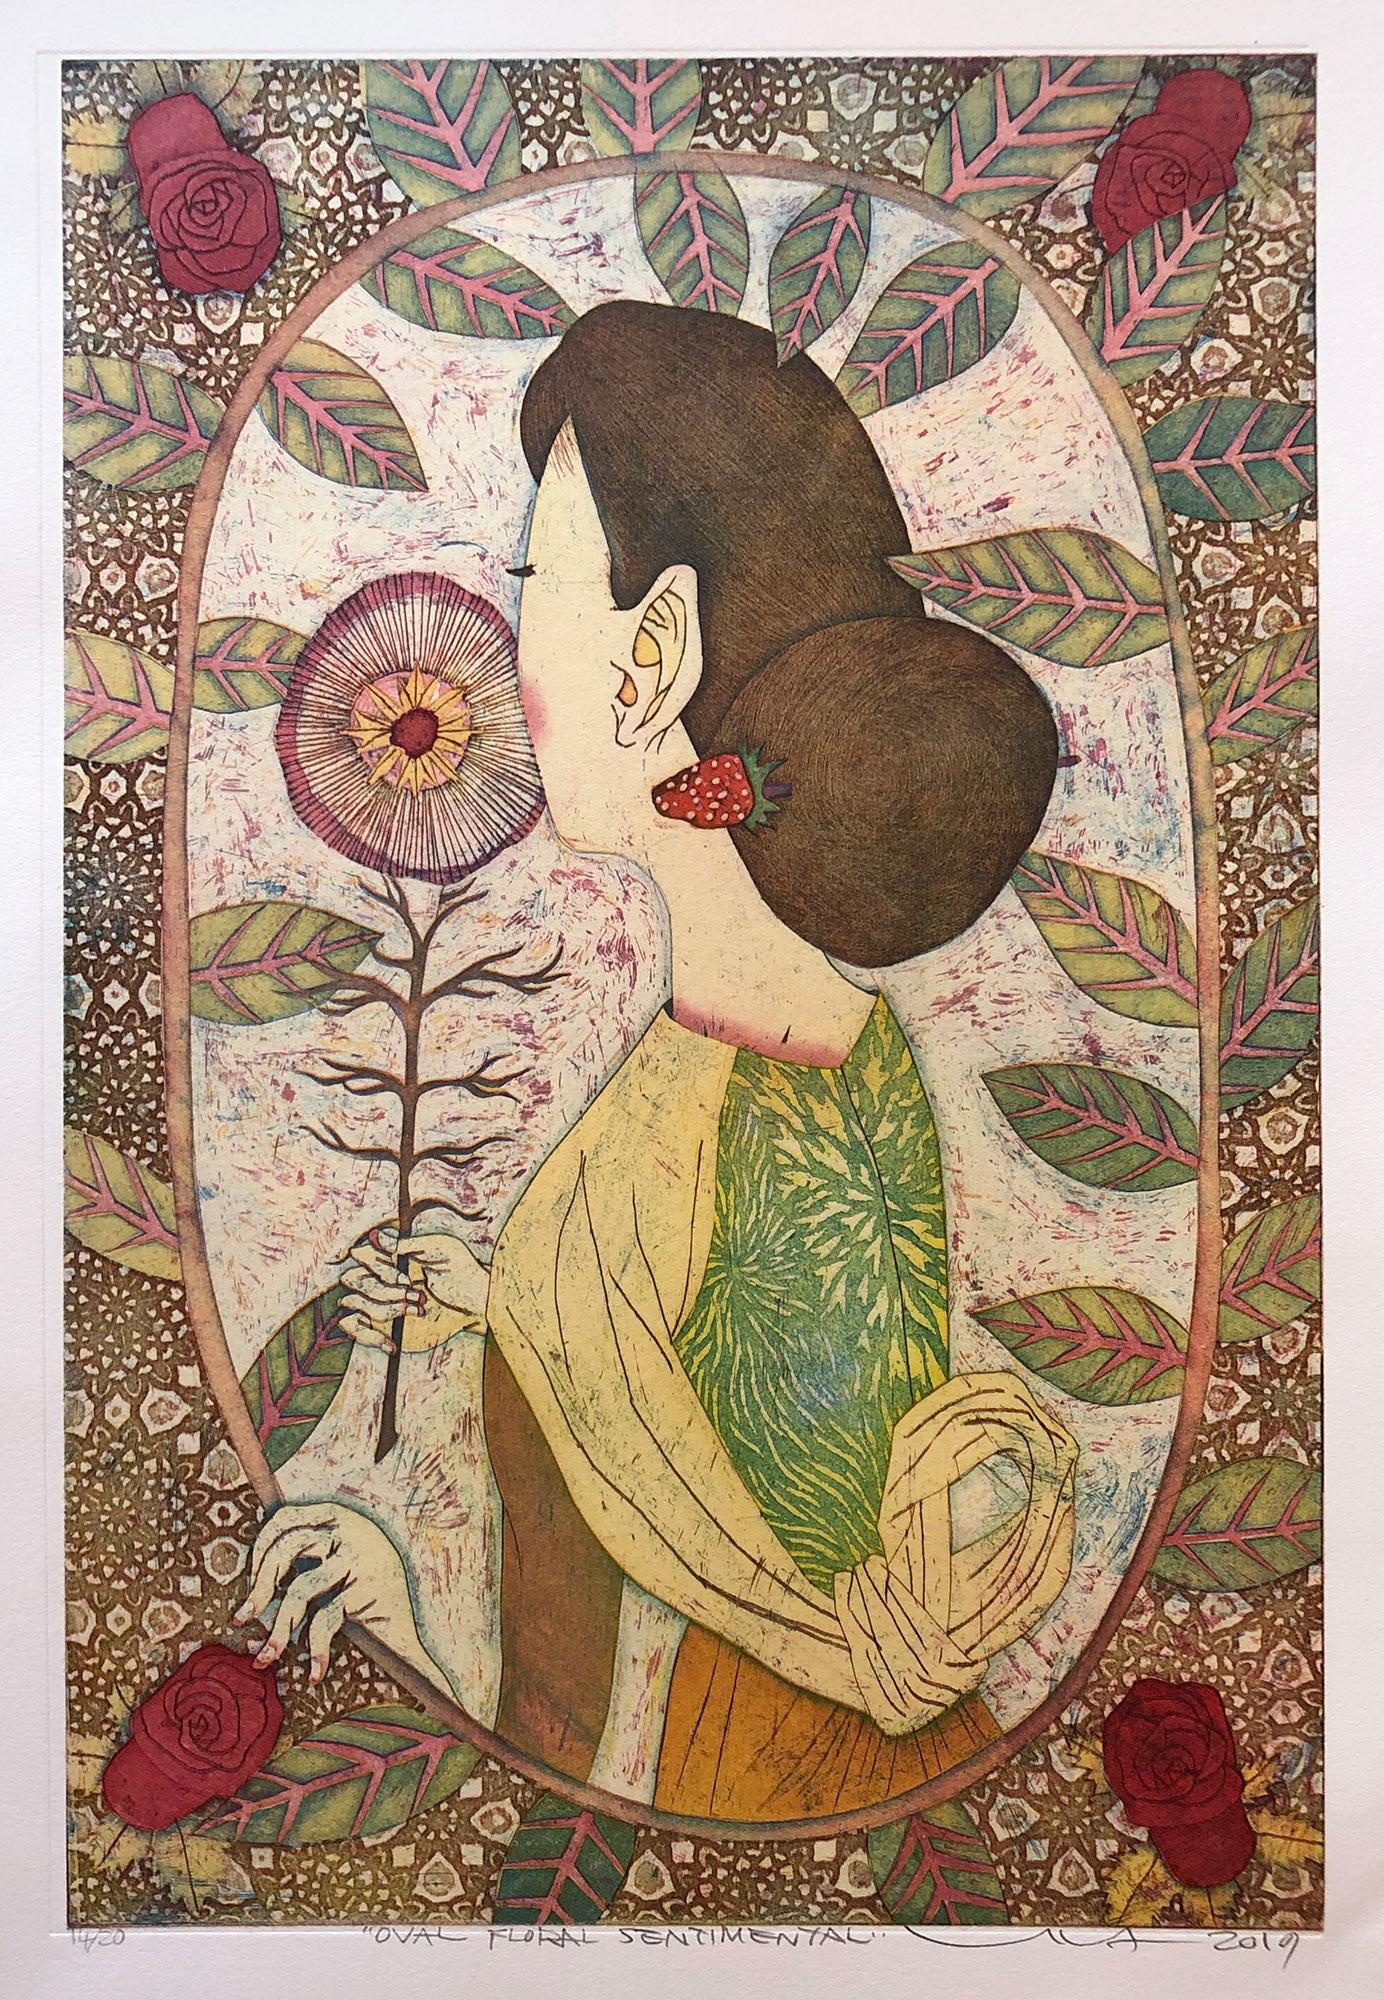 Yuji Hiratsuka Portrait Print - Oval Floral Sentimental